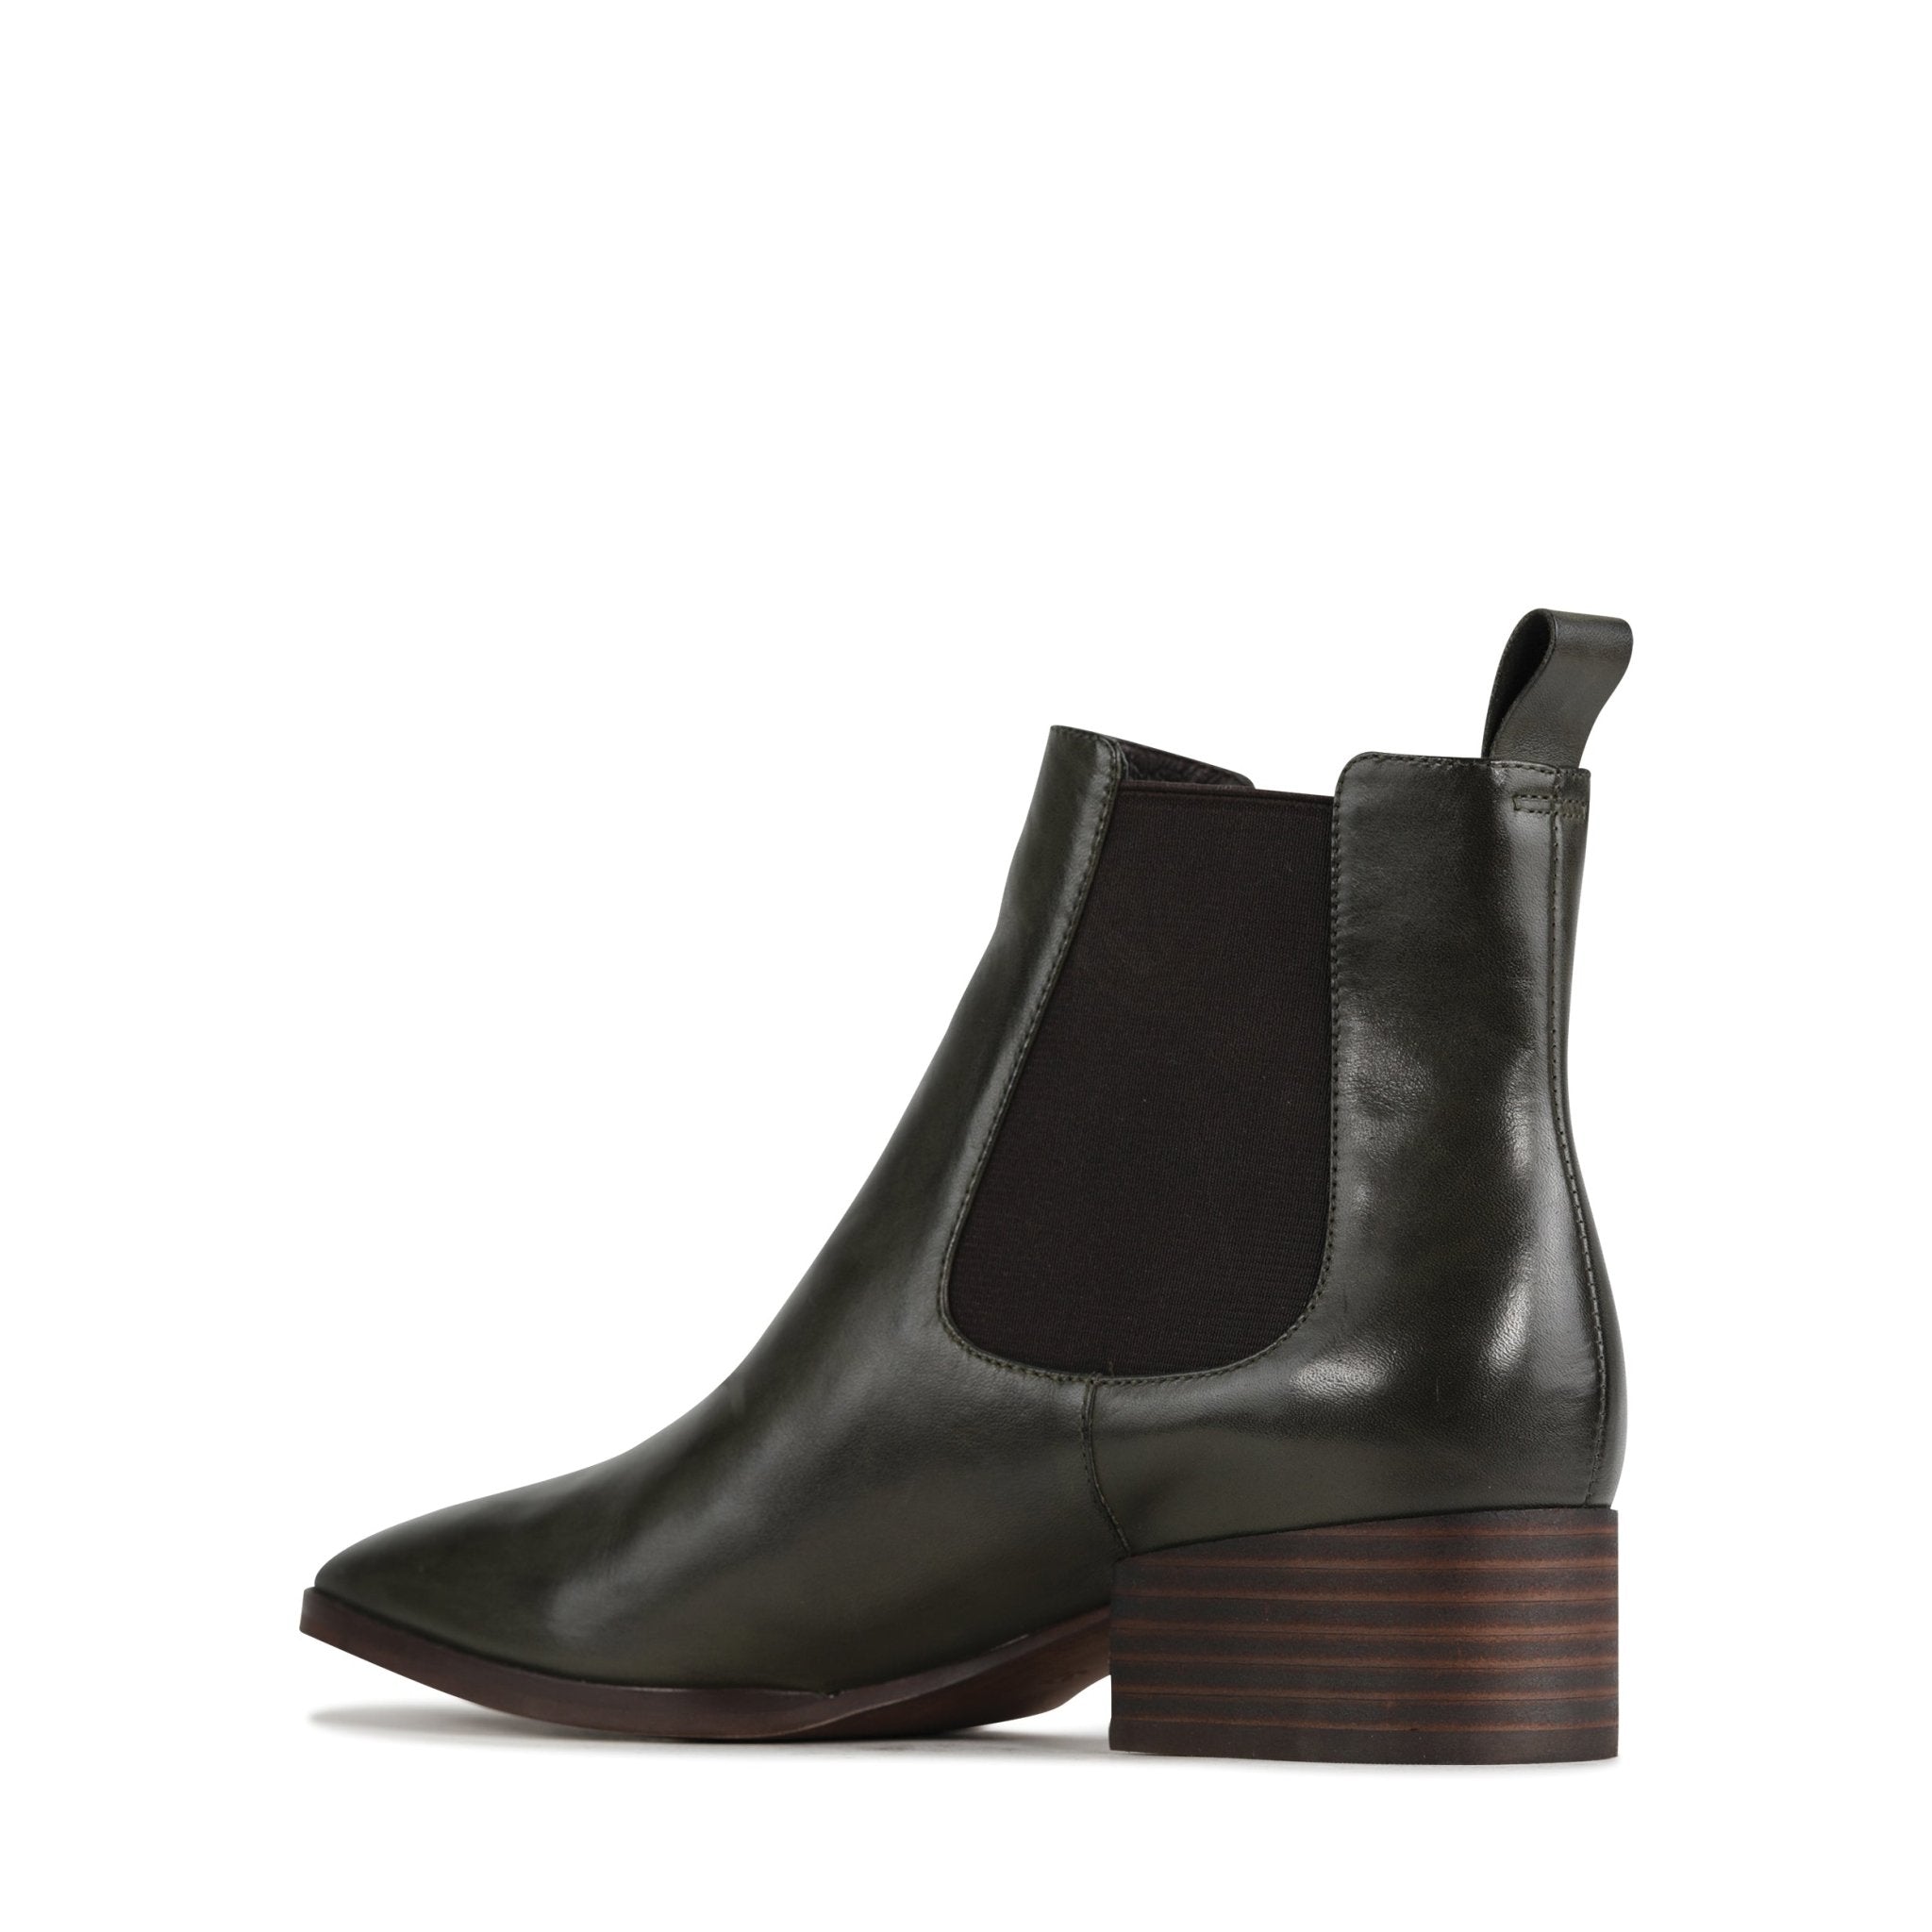 ALEKS - EOS Footwear - #color_Dark/olive